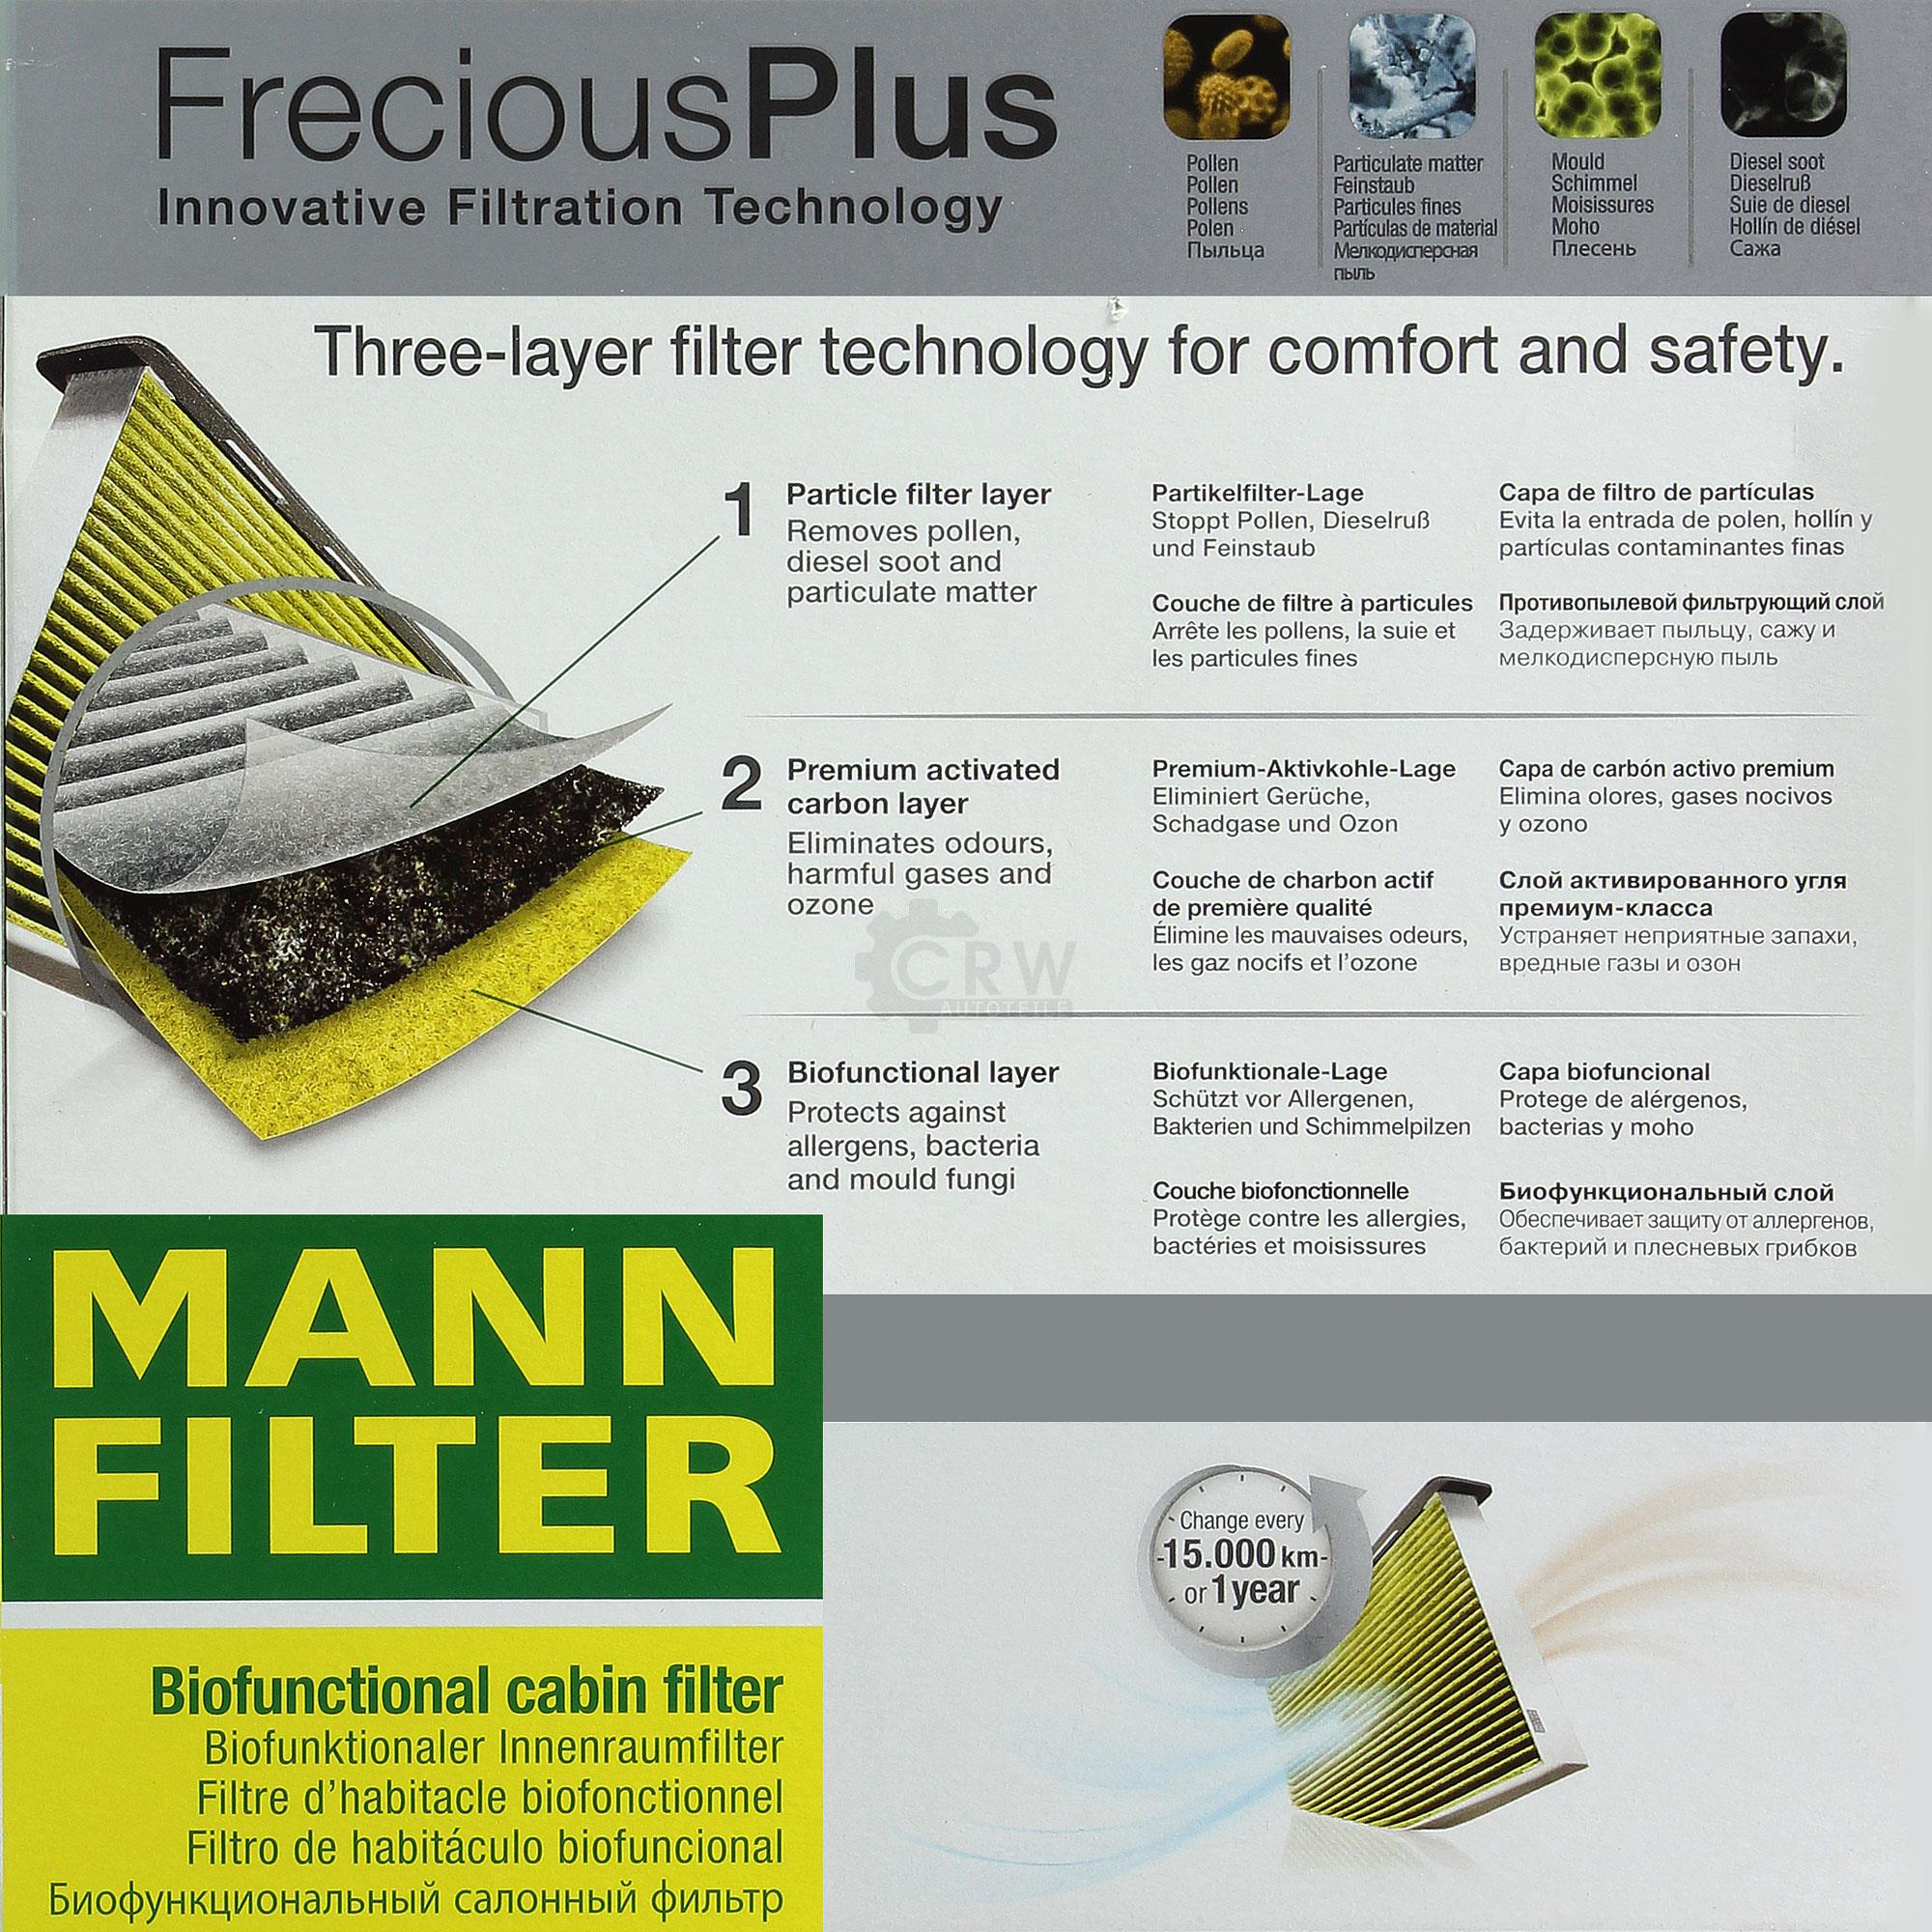 MANN-Filter Innenraumfilter Biofunctional für Allergiker FP 5141